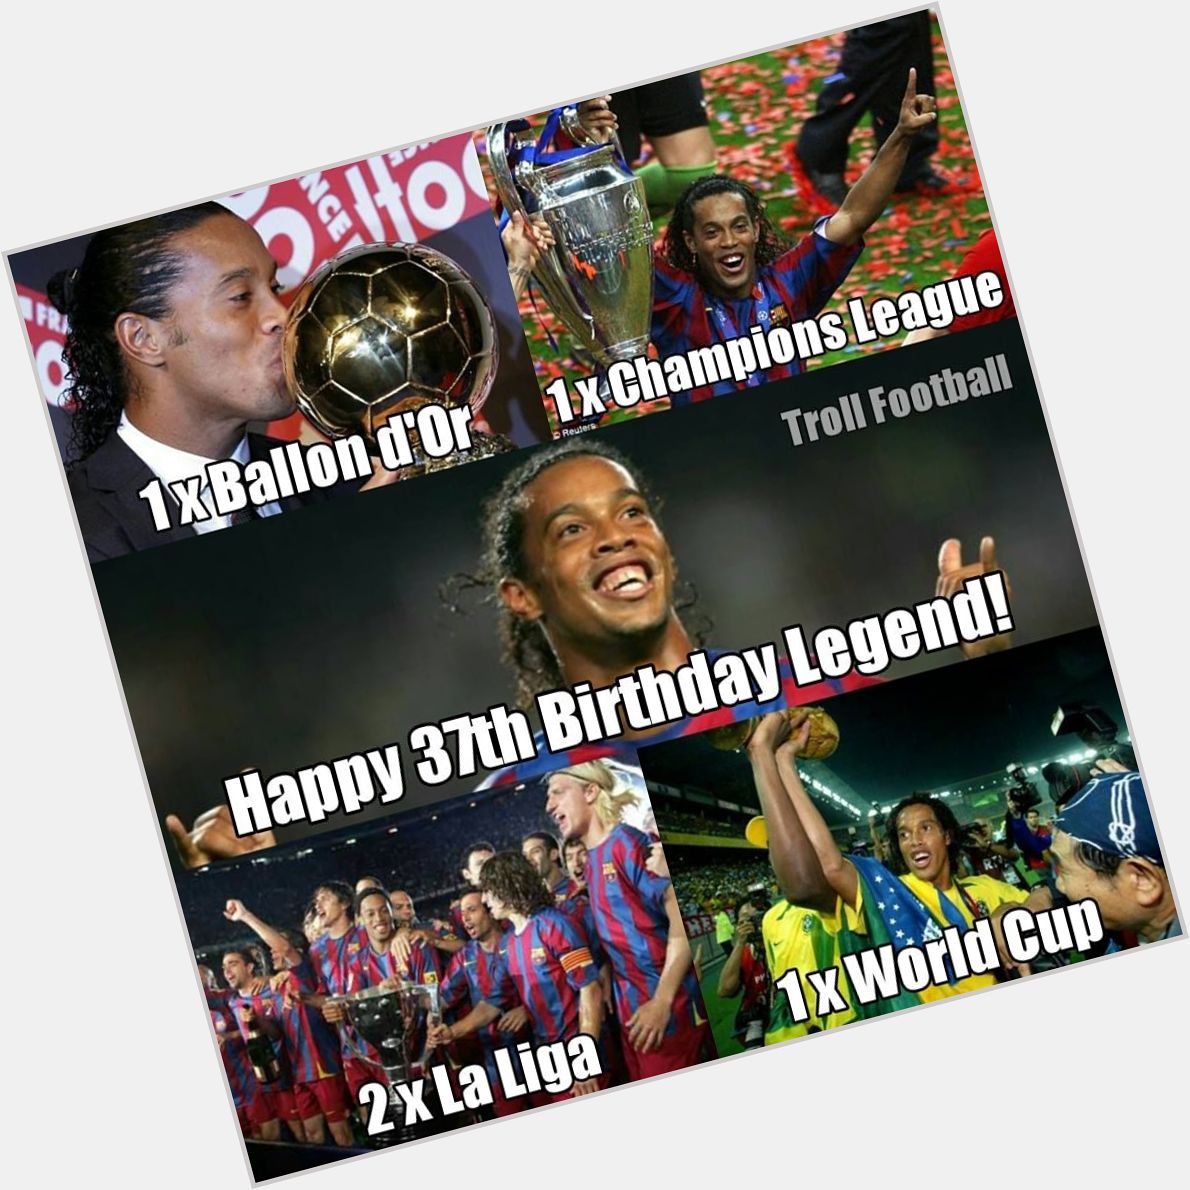 Happy Birthday to Ronaldinho Gaúcho! 